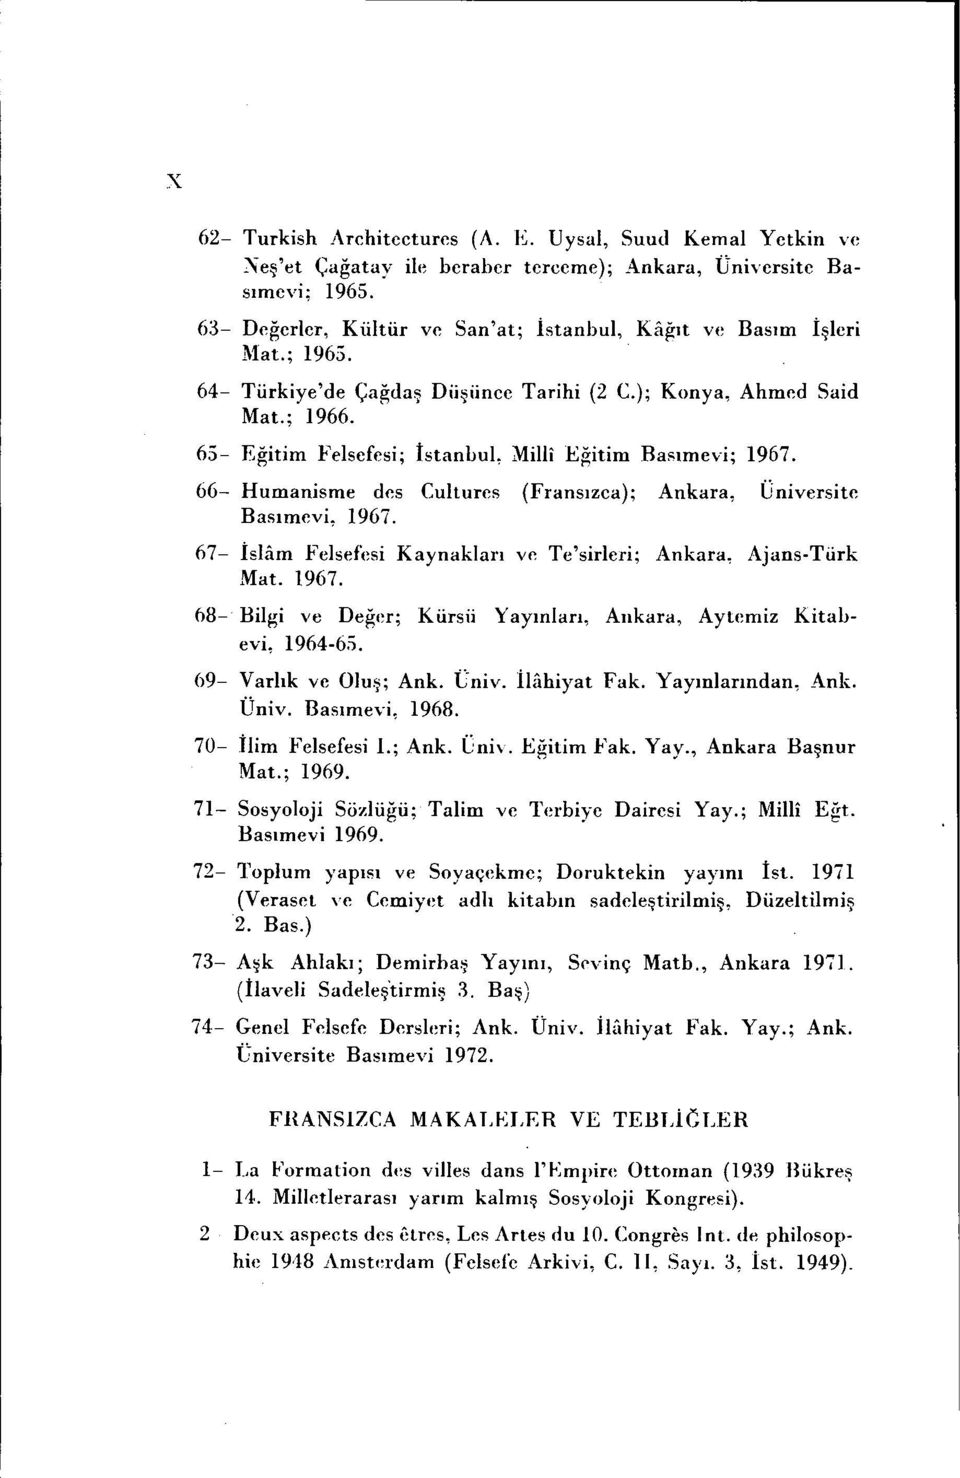 65- Eğitim Felsefesi; İstanbul, Milli Eğitim Basımevi; 1967. 66- Humanisme des Cultures (Fransızca); Ankara, Üniversite Basımevi, 1967.